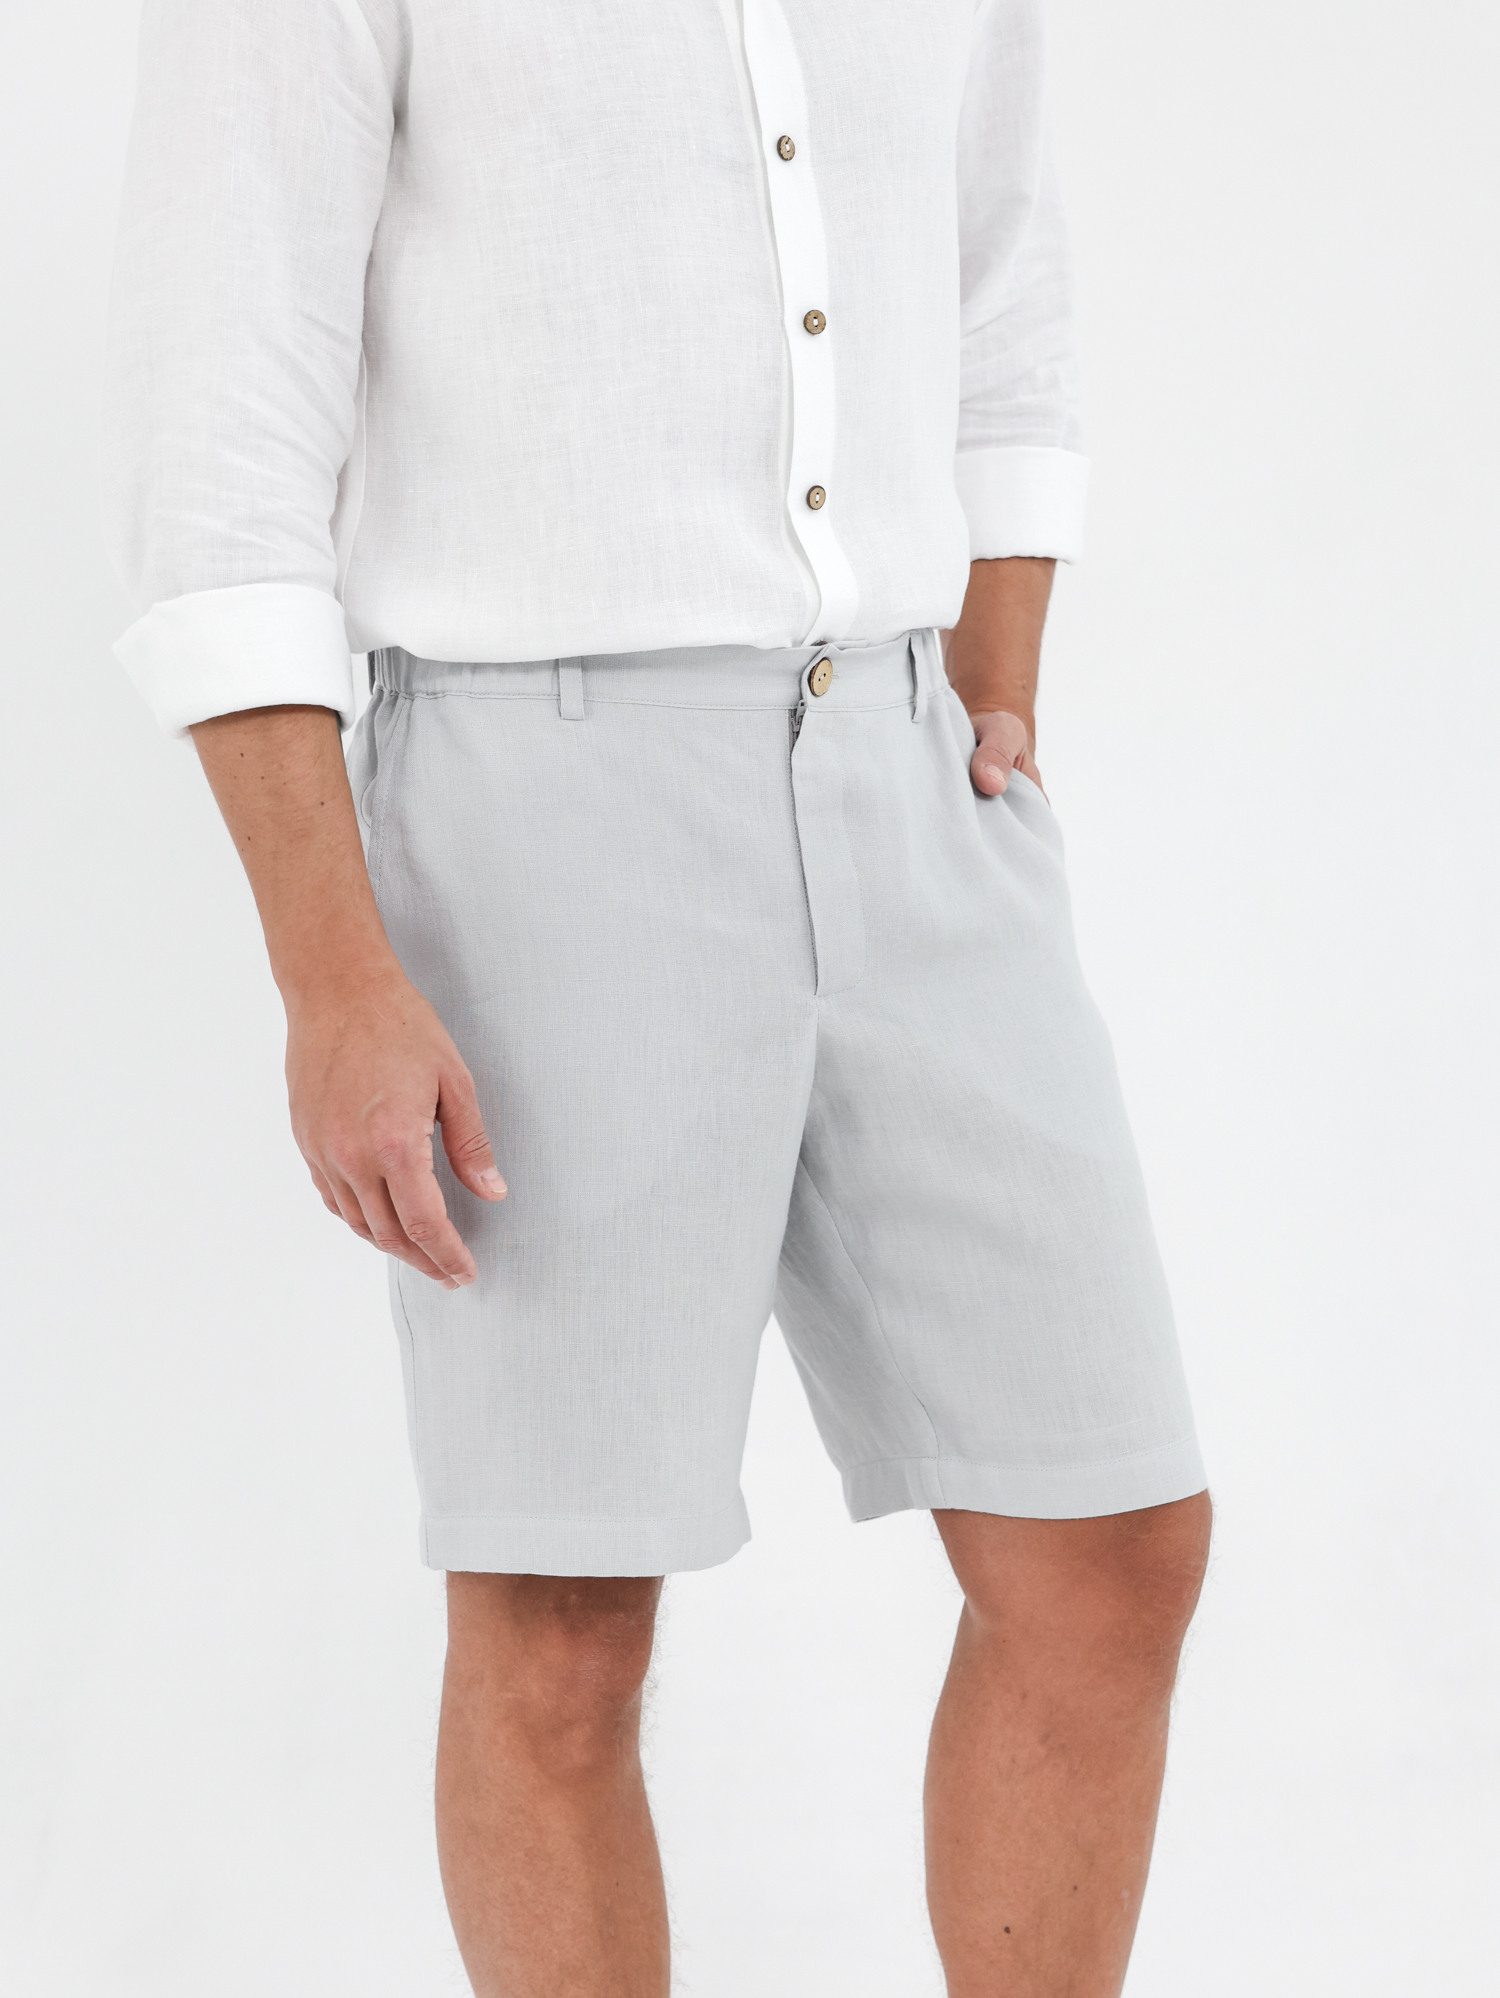 Men's linen short pants